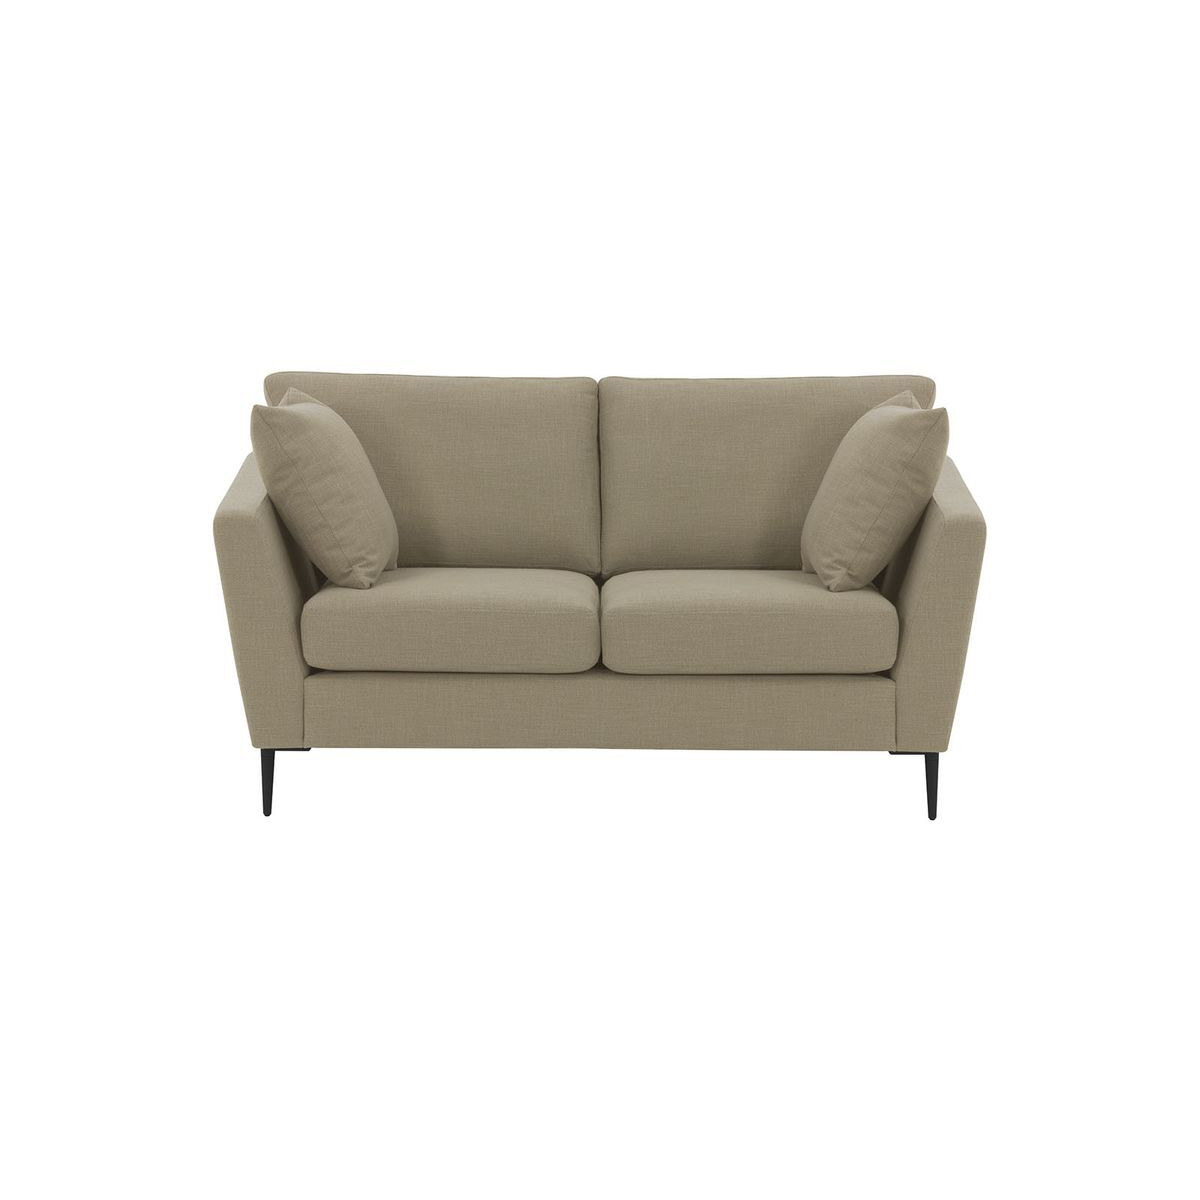 Imani 2 Seater Sofa, beige - image 1